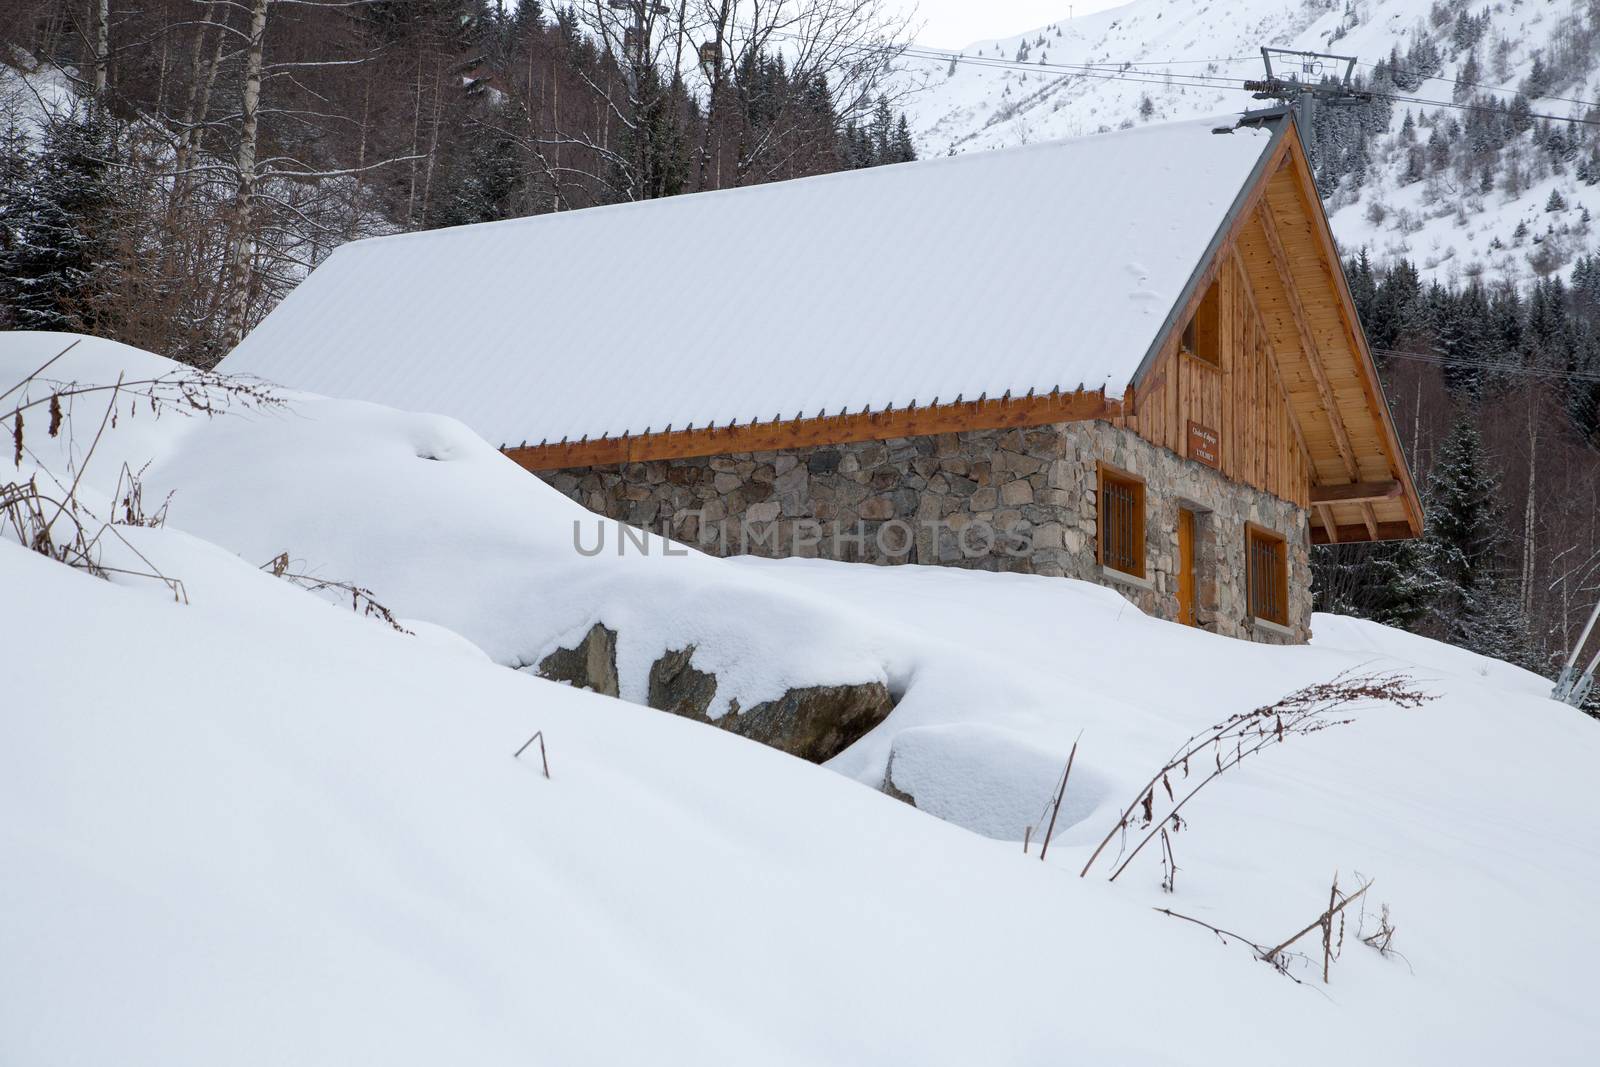 Chalet in winter by Kartouchken